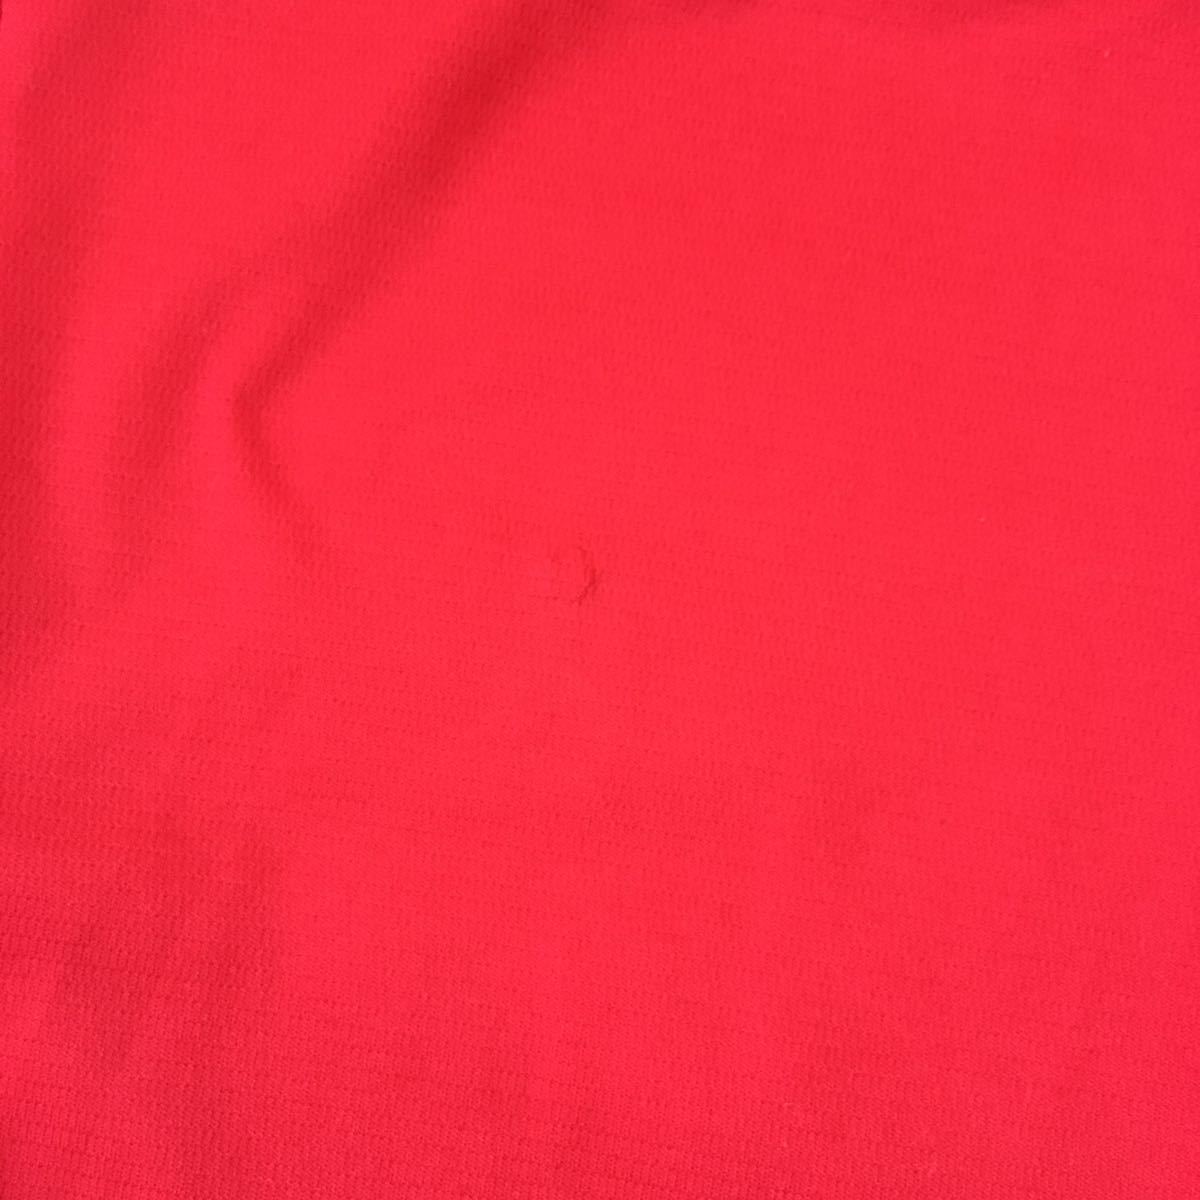  including carriage YONEX Yonex sport wear short sleeves red cat pohs badminton 